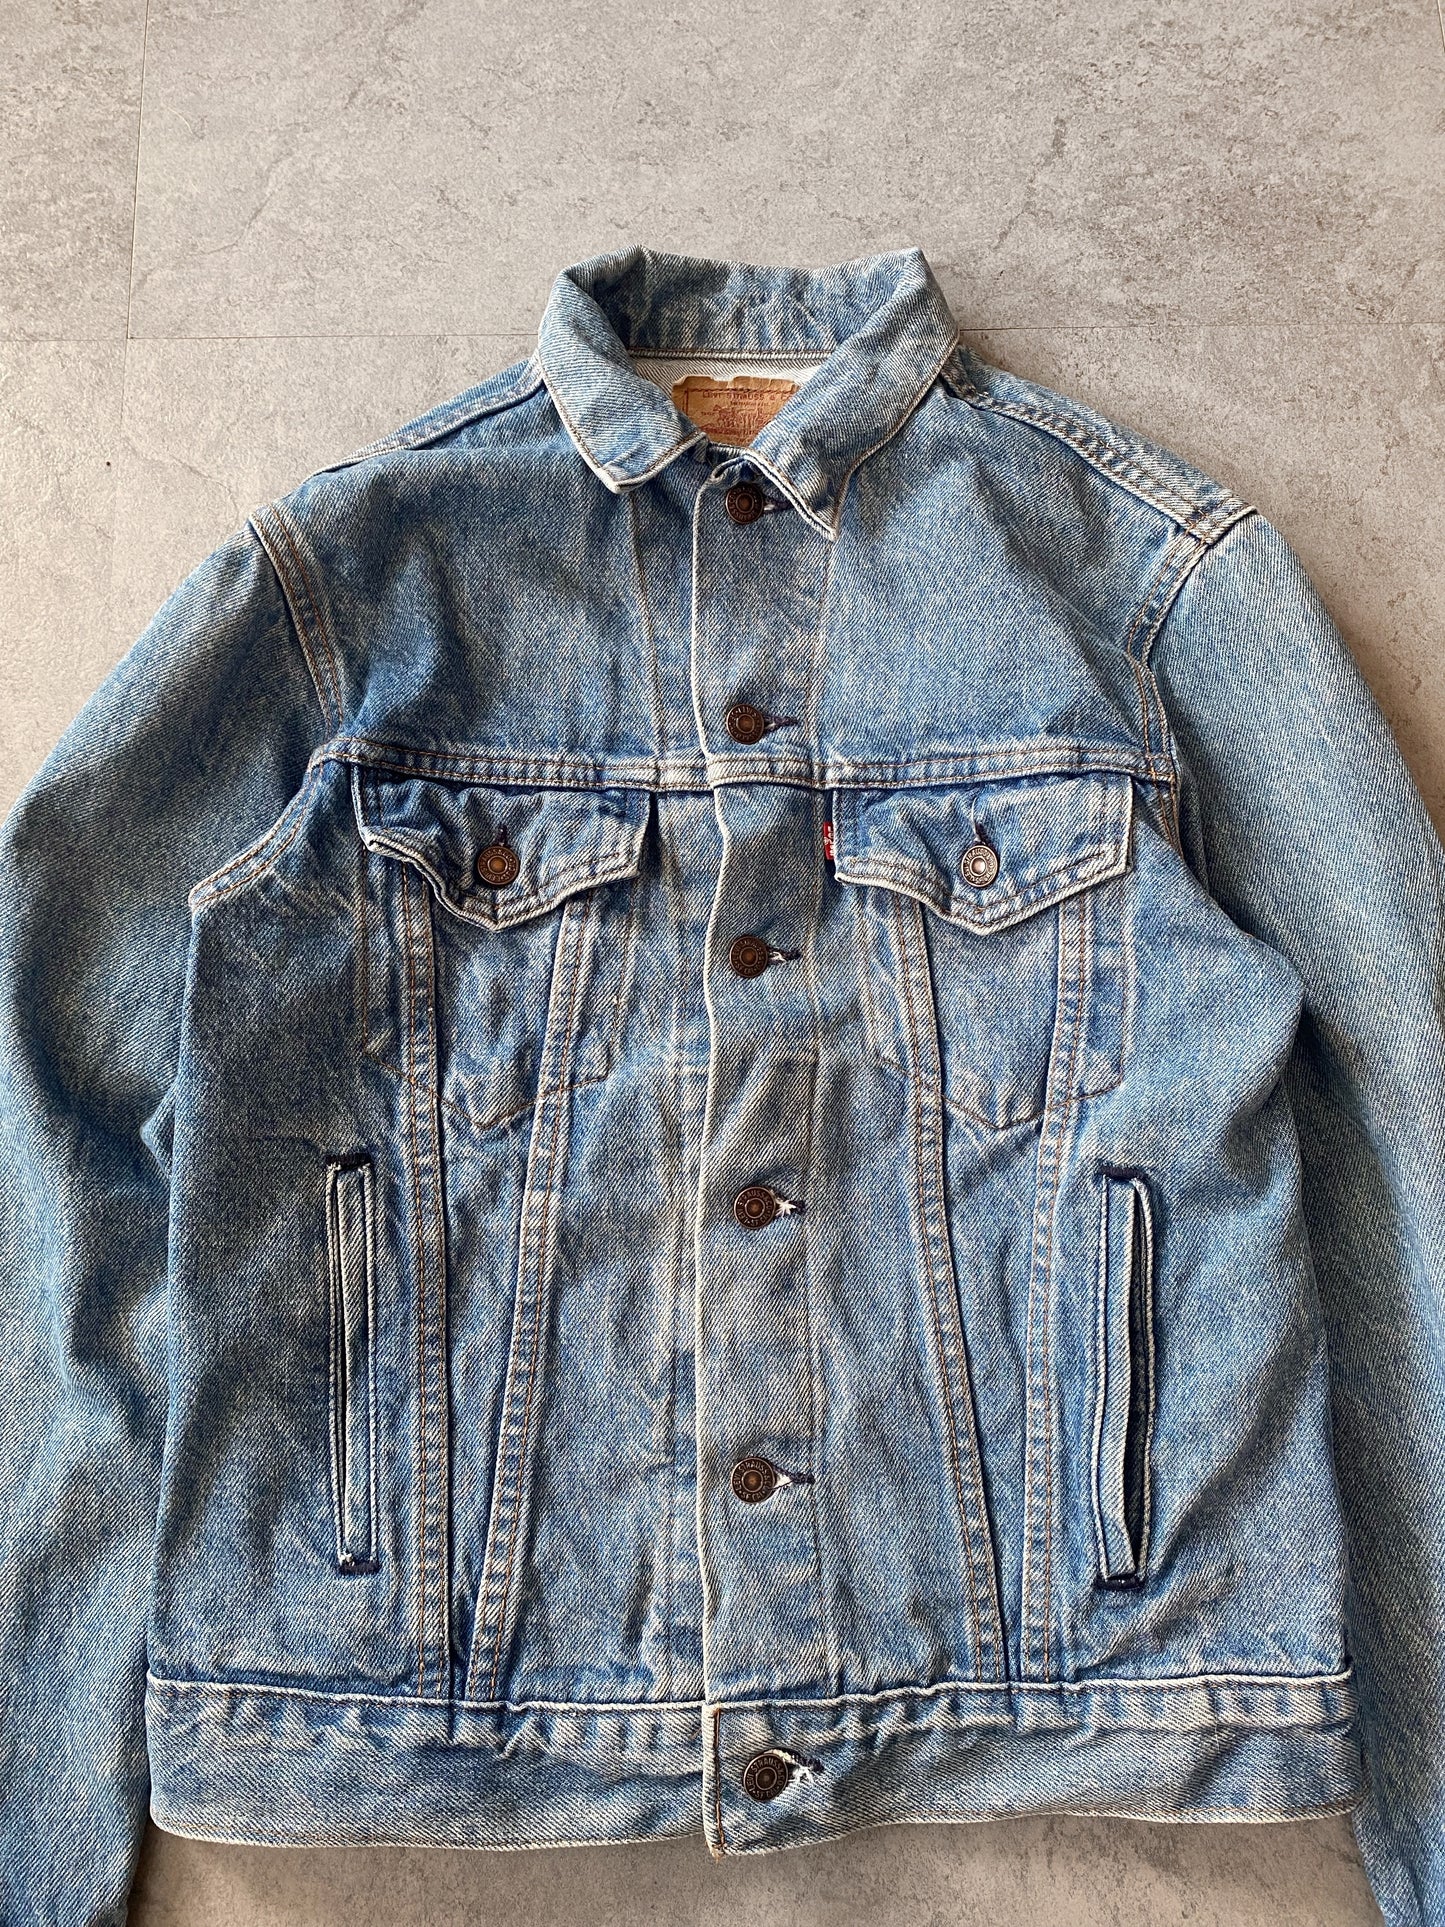 90s Vintage Levi’s Denim Jacket